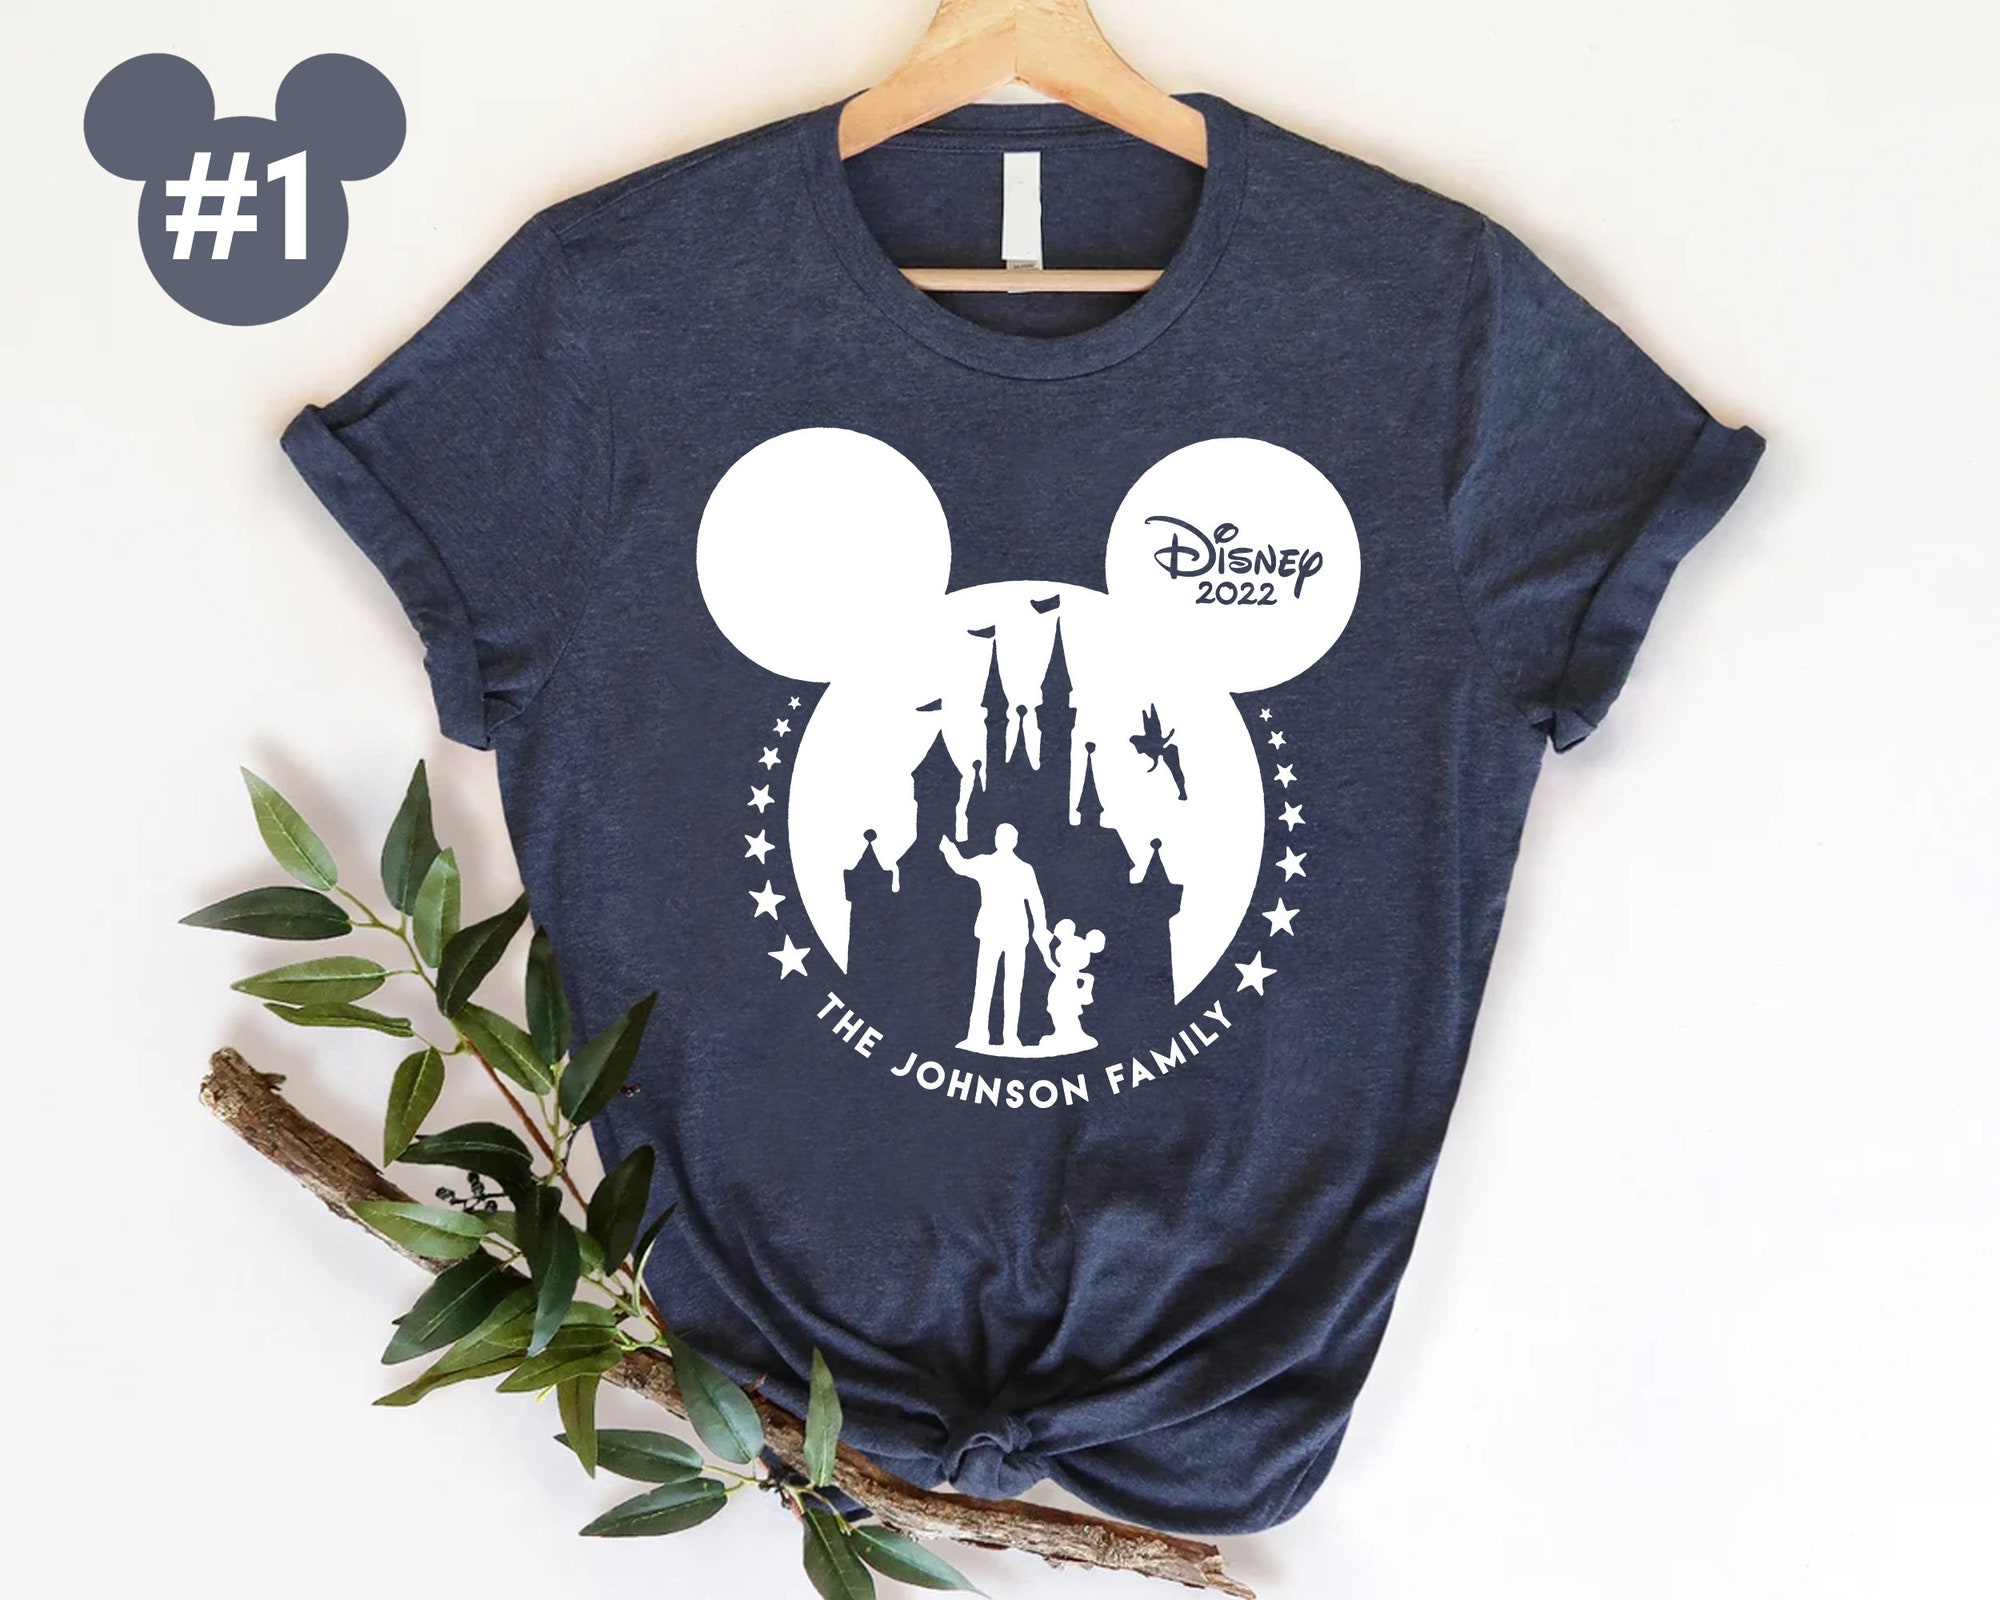 Personalized Disney Shirts, Disney Group Shirts, Matching Disney Shirts for Friends